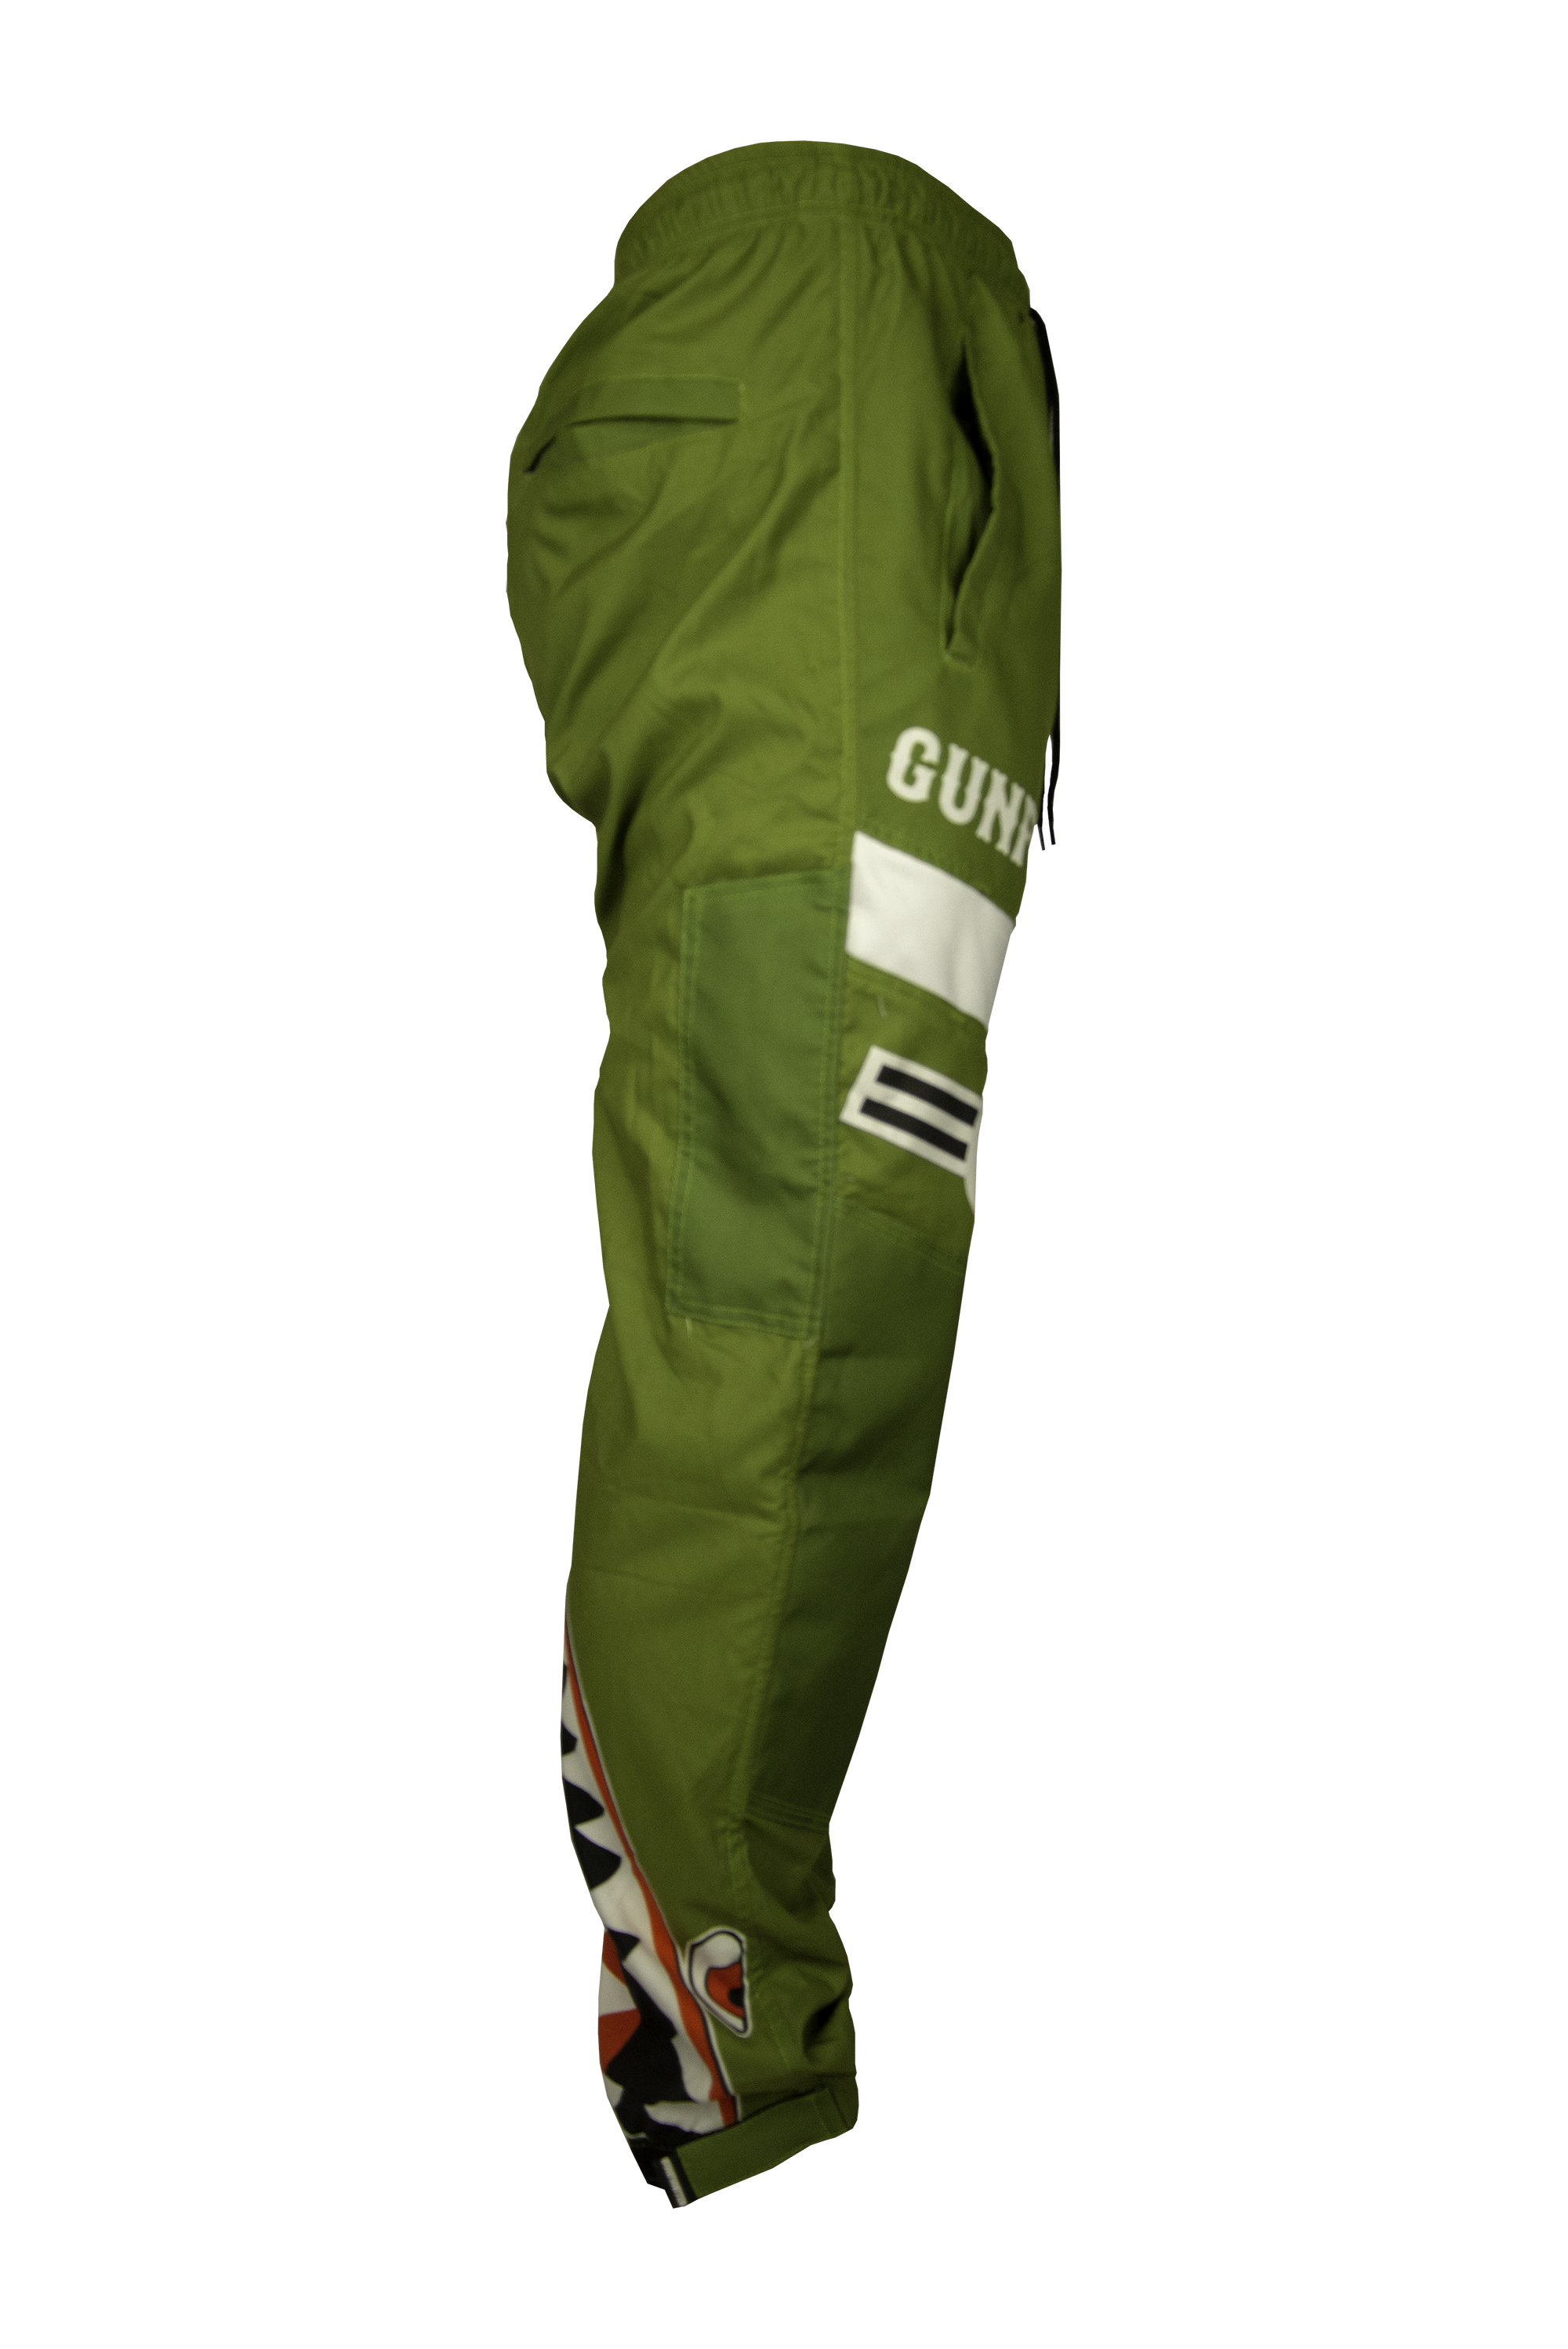 Gunfighter Sports Prototype Pant - Green